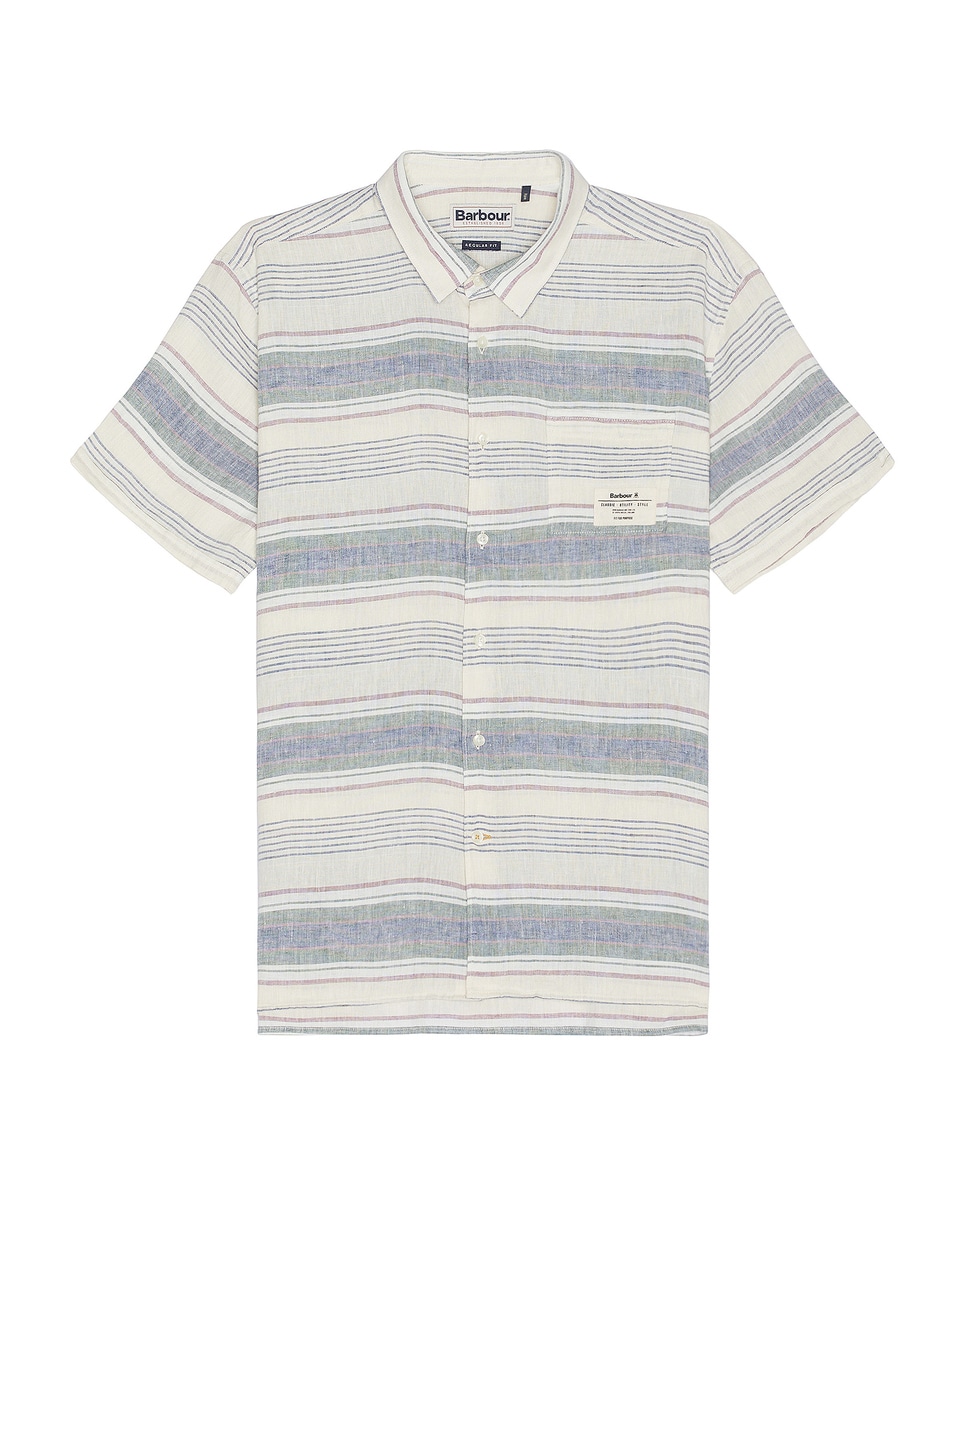 Image 1 of Barbour Crimwell Shirt in Whisper White